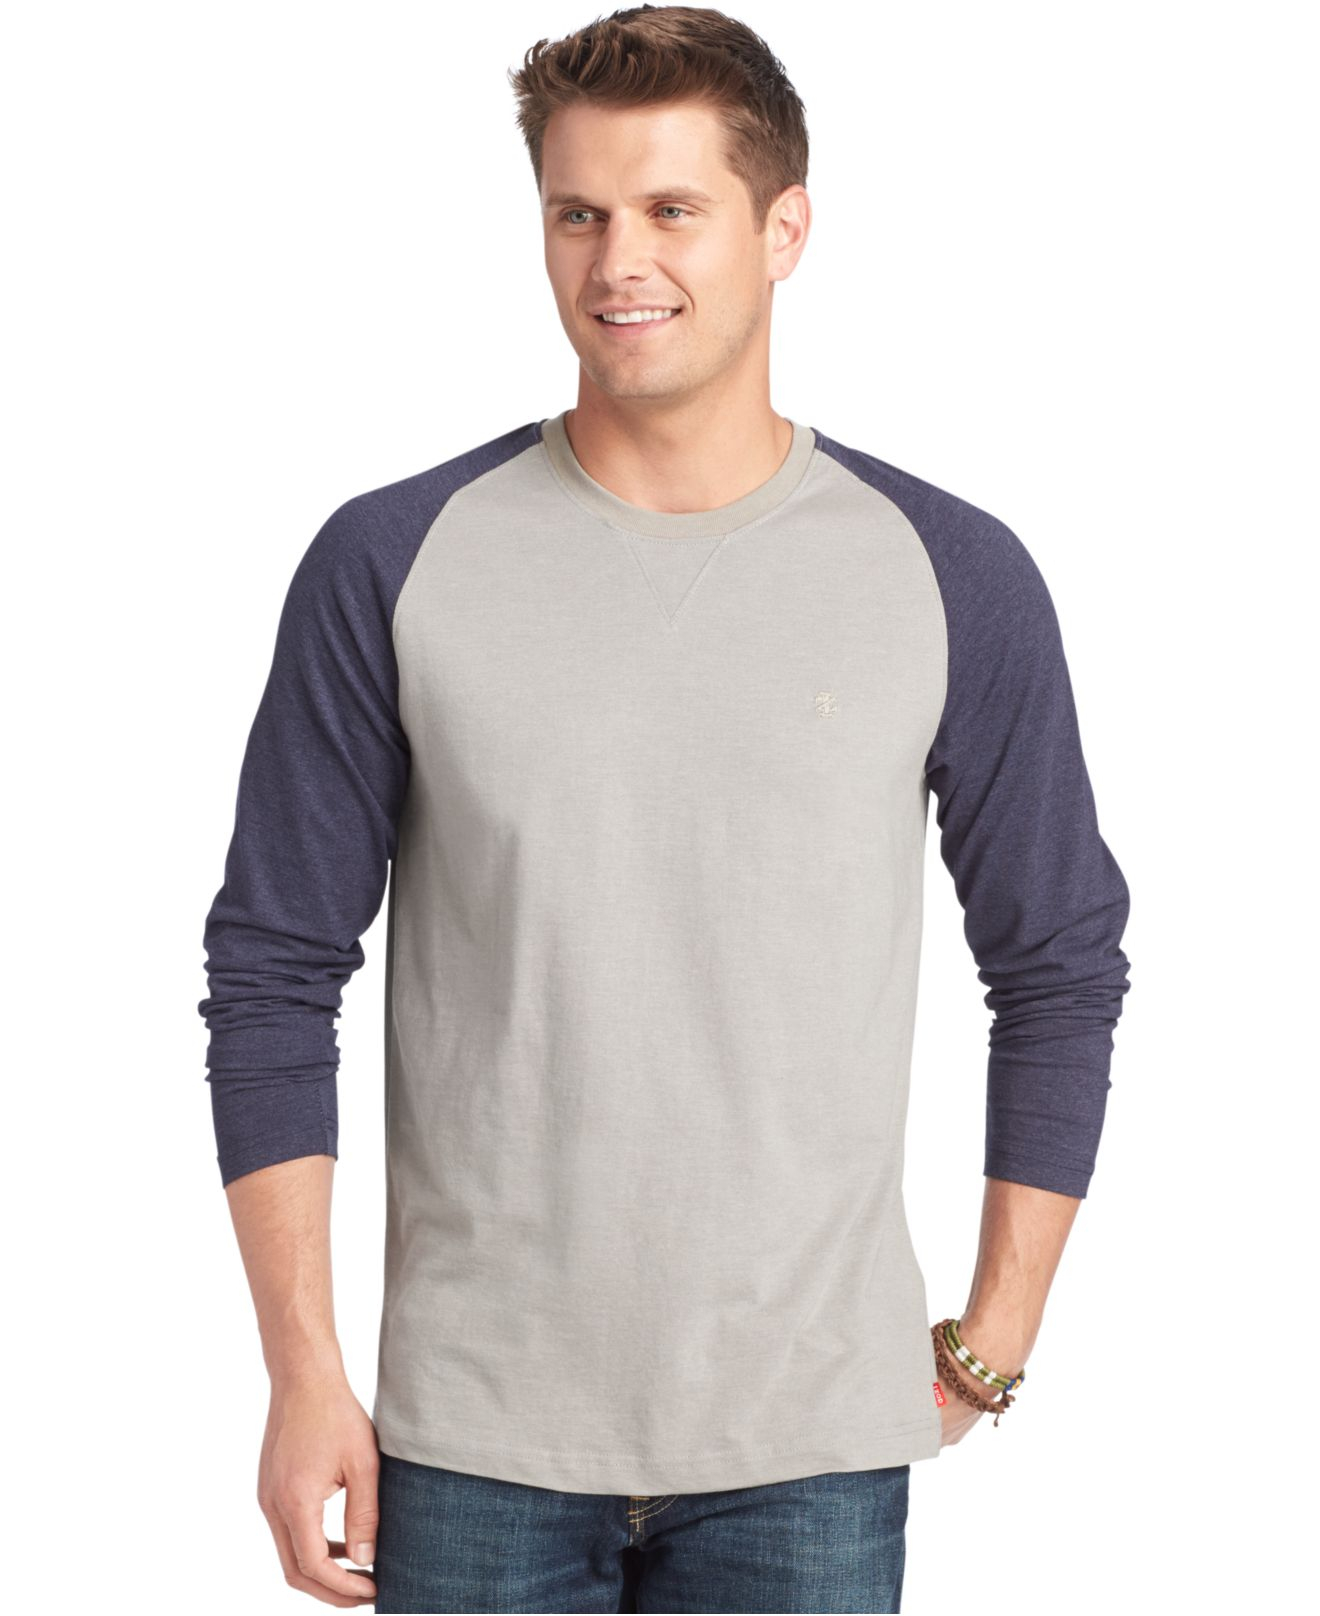 Lyst - Izod Colorblocked Long-Sleeve Raglan T-Shirt in Blue for Men